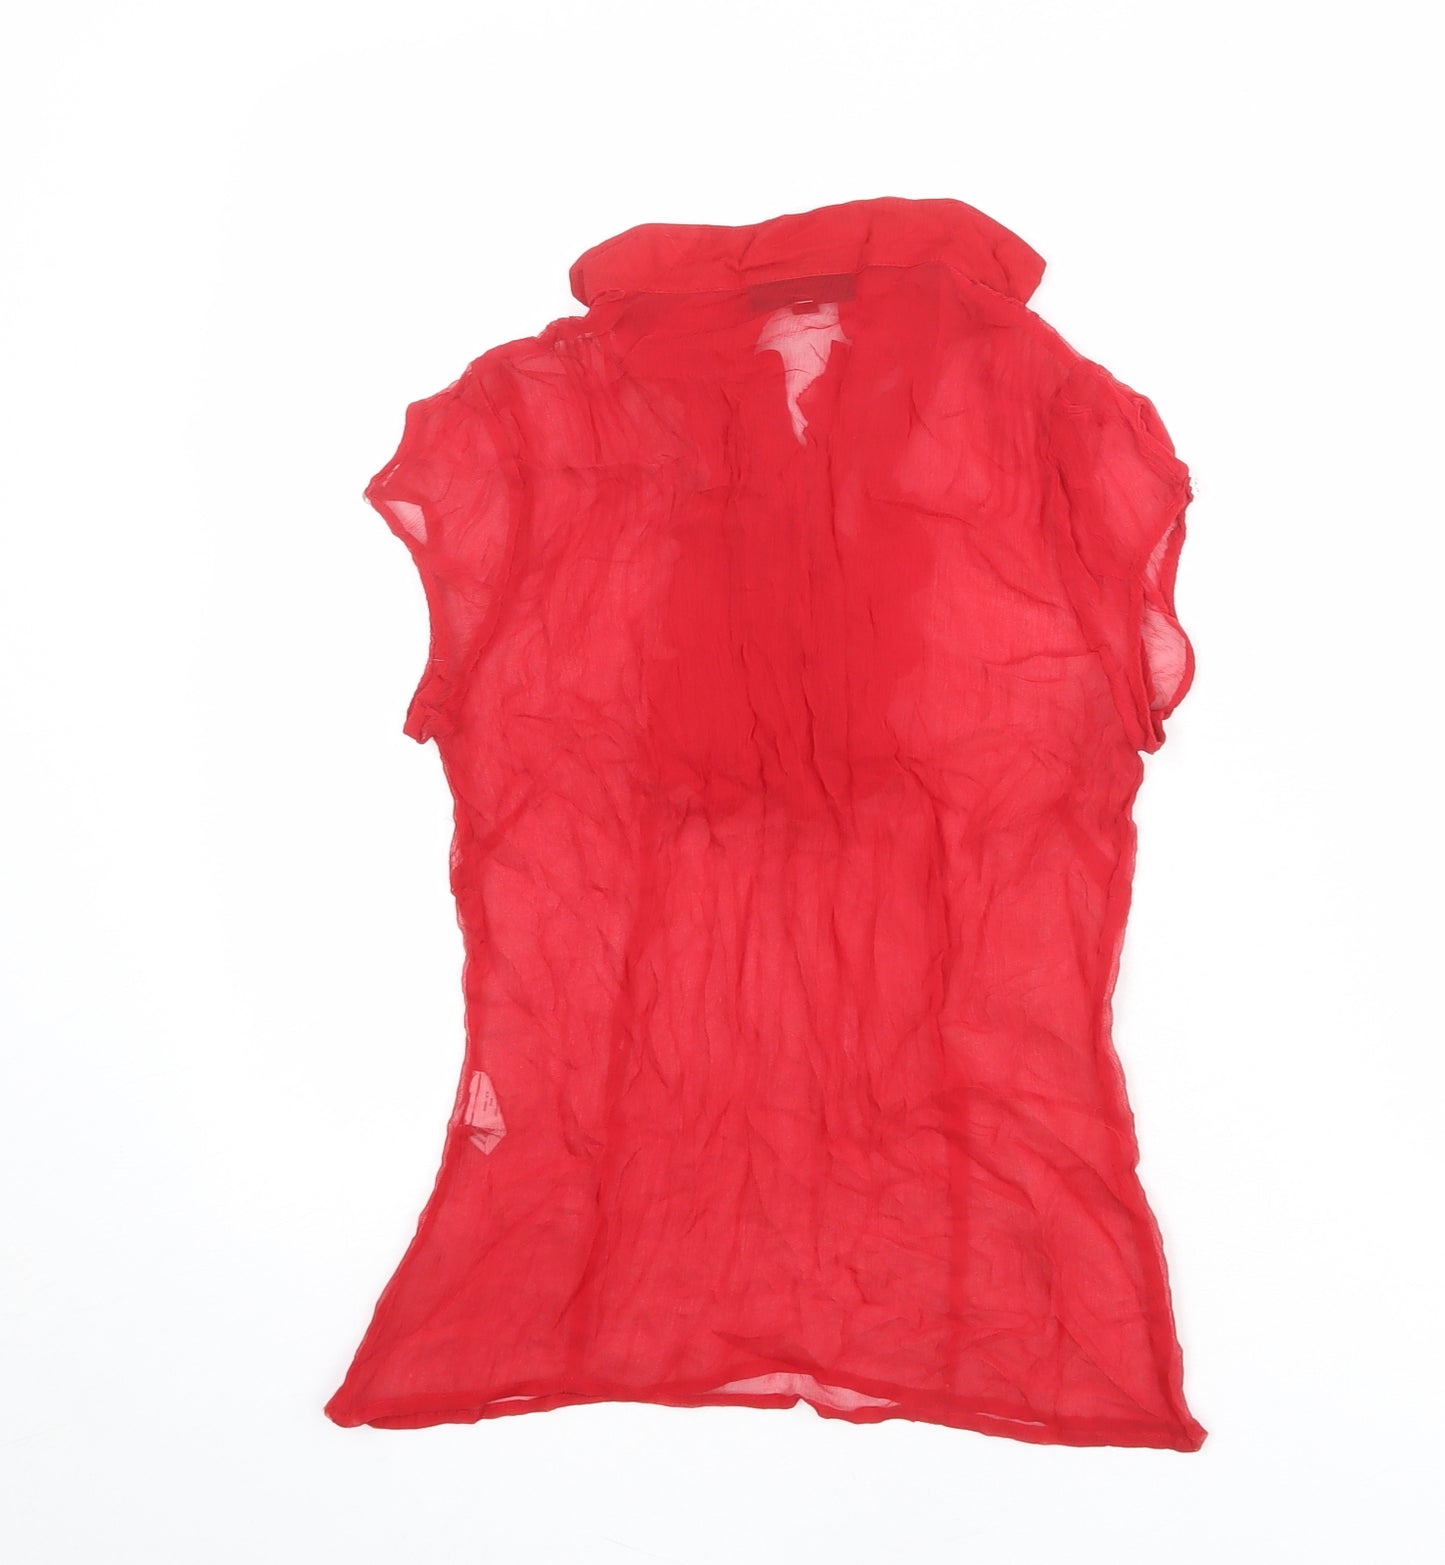 Warehouse Womens Red Silk Basic Blouse Size 10 V-Neck